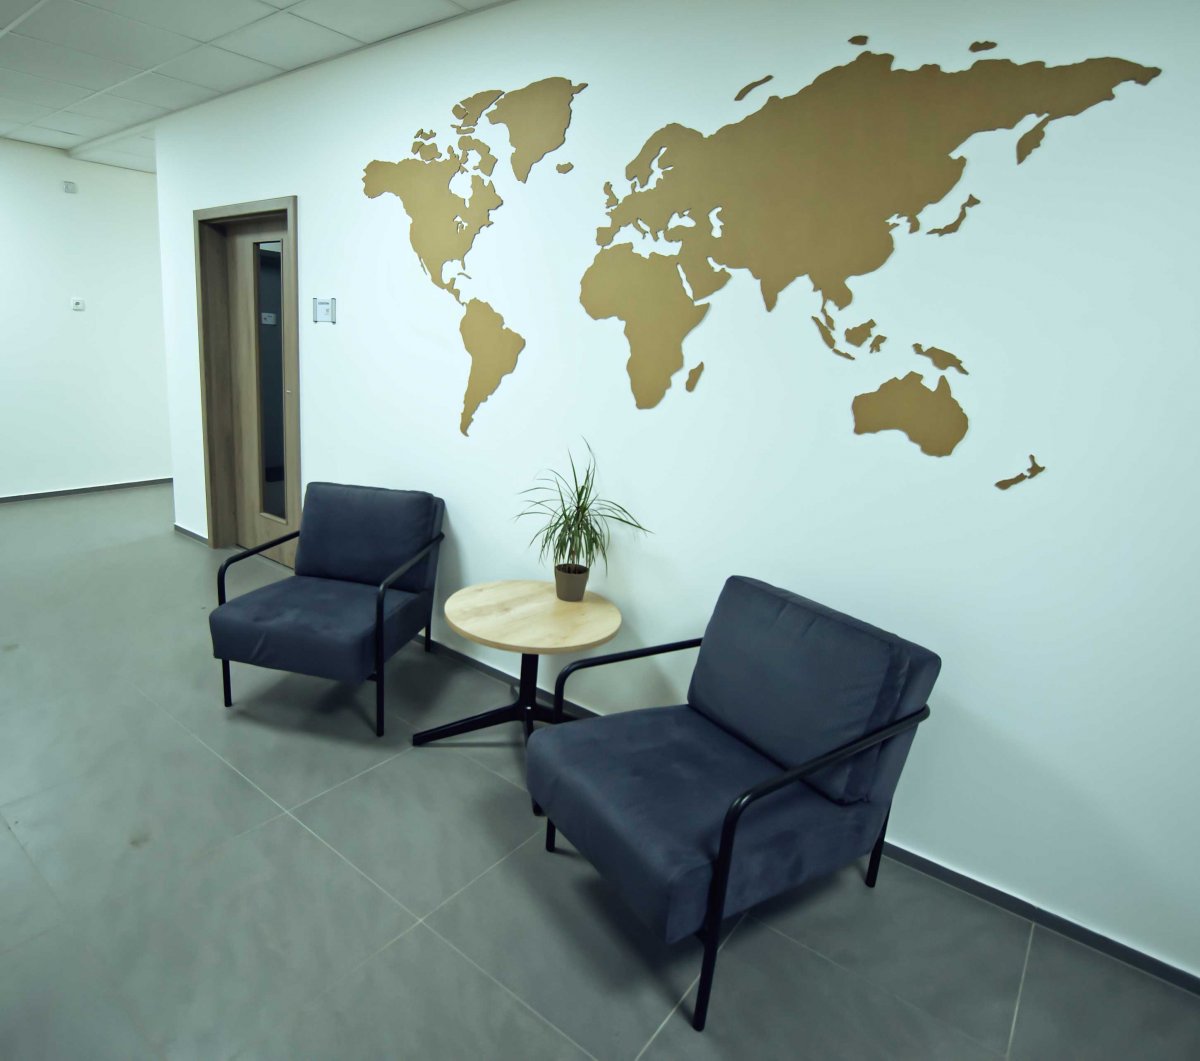 World Wall Map - corrugated cardboard 1500x750mm